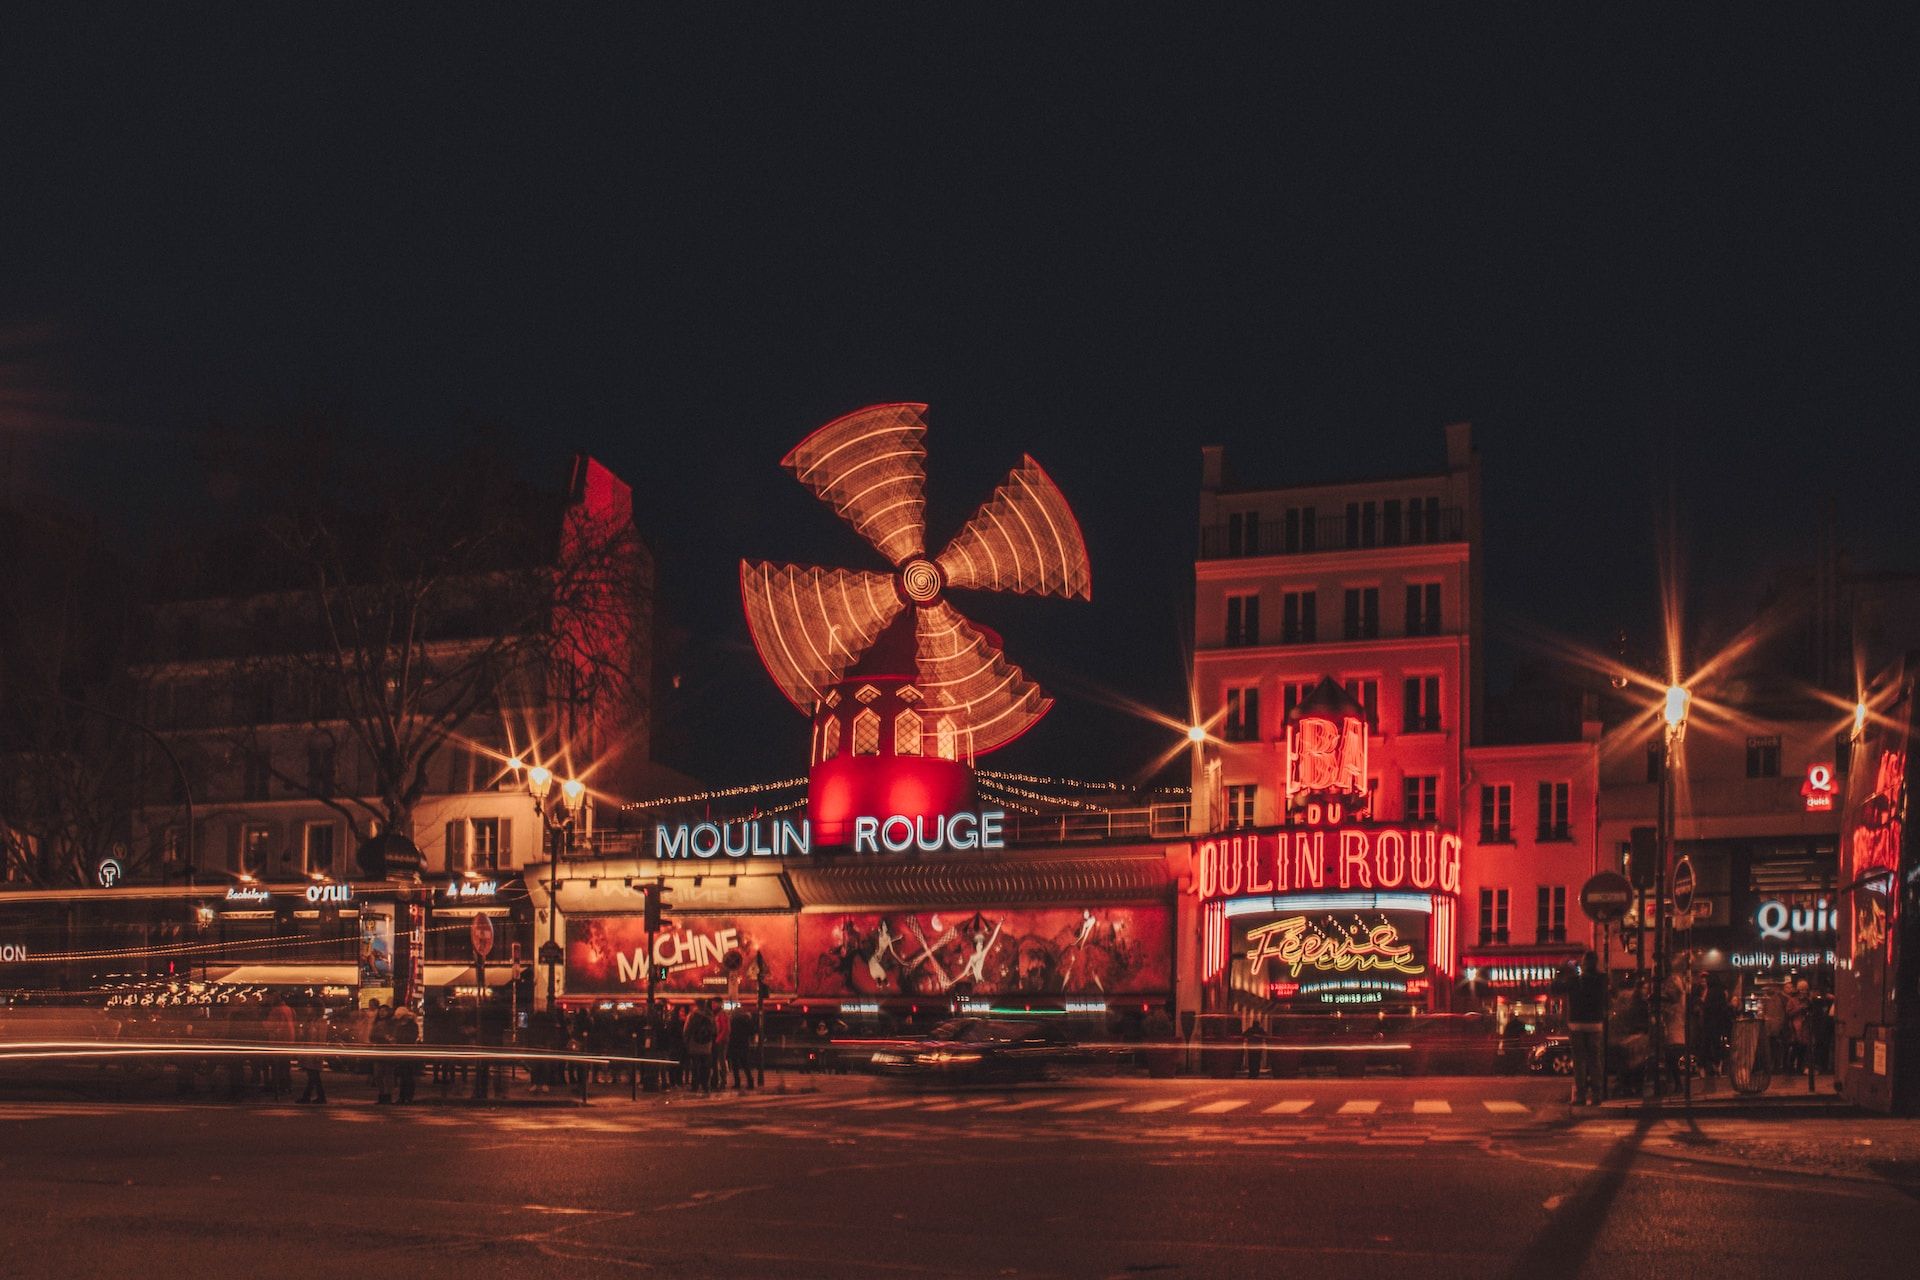 The Moulin Rouge building in Paris